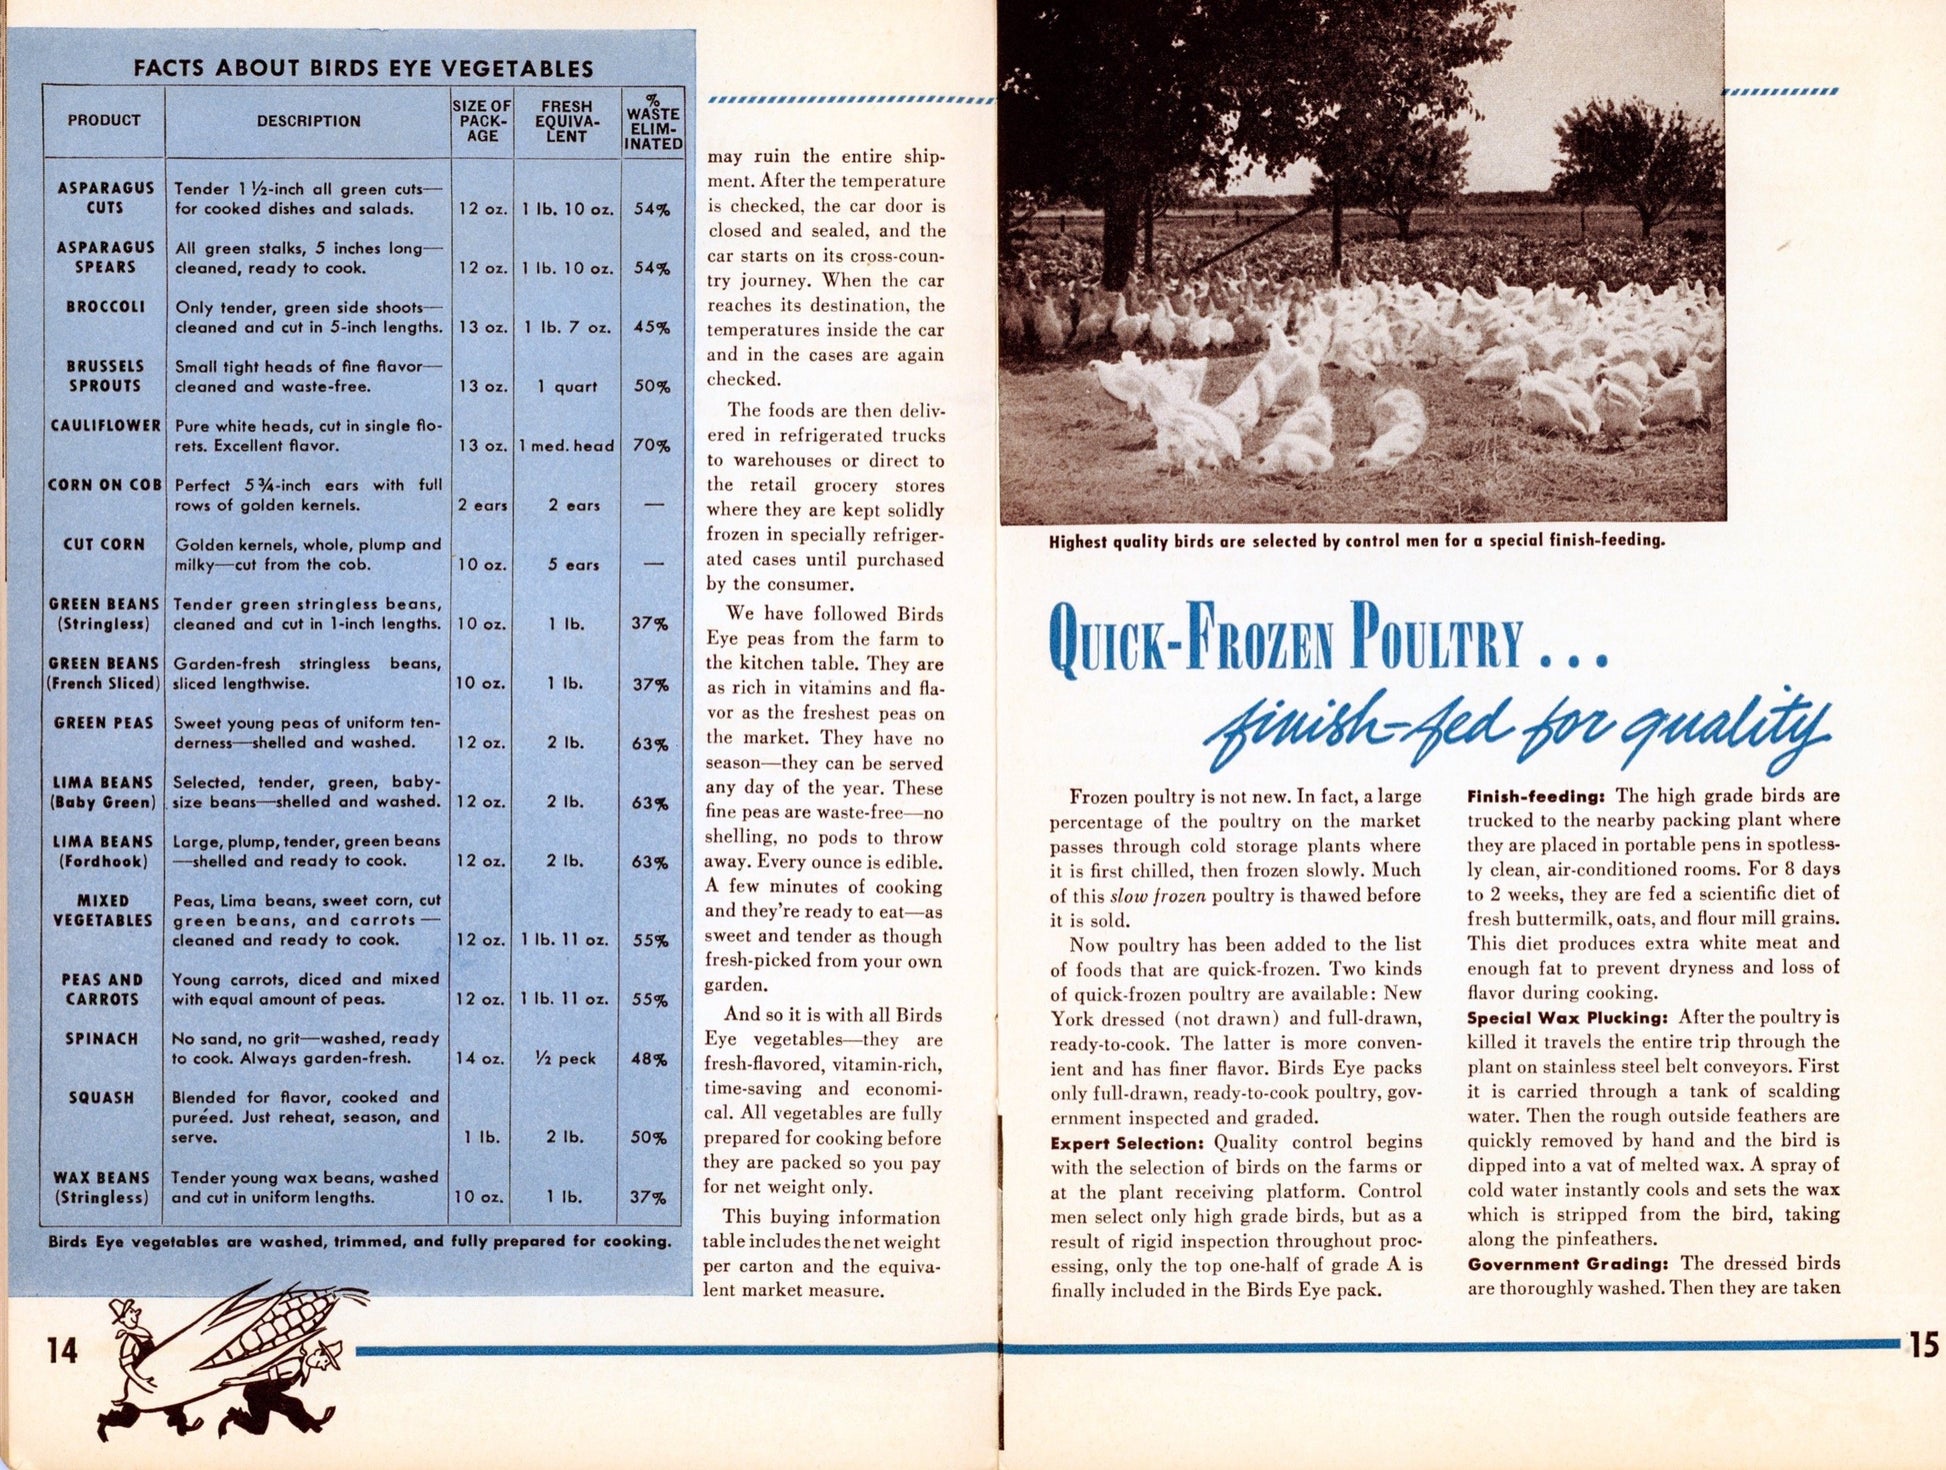 MODERN FOODS FOR MODERN MENUS Vintage Recipe Book Published by Birds Eye Brand Circa 1942